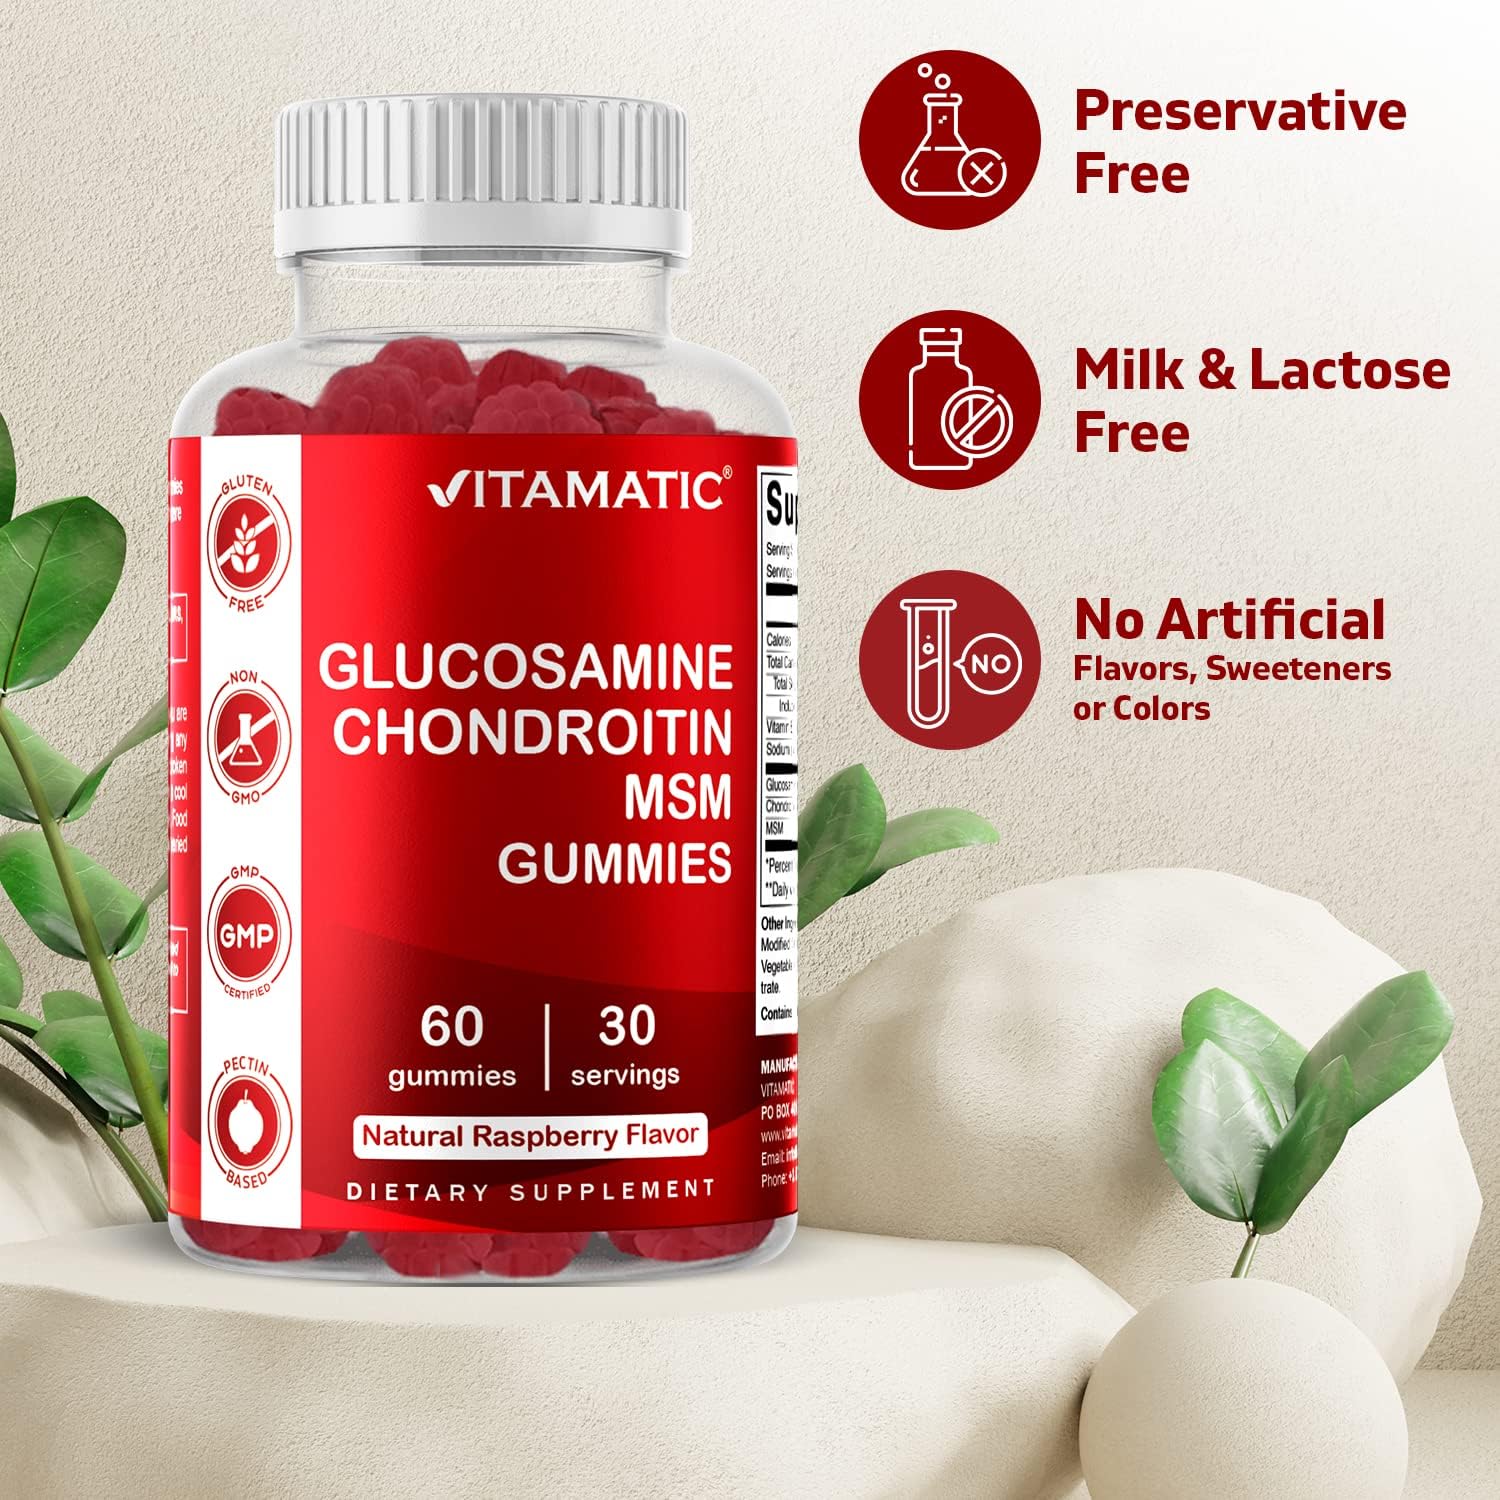 Vitamatic Glucosamine Chondroitin Gummies with MSM & Vitamin E - Joint Support - 60 Pectin Based Gummies : Health & Household